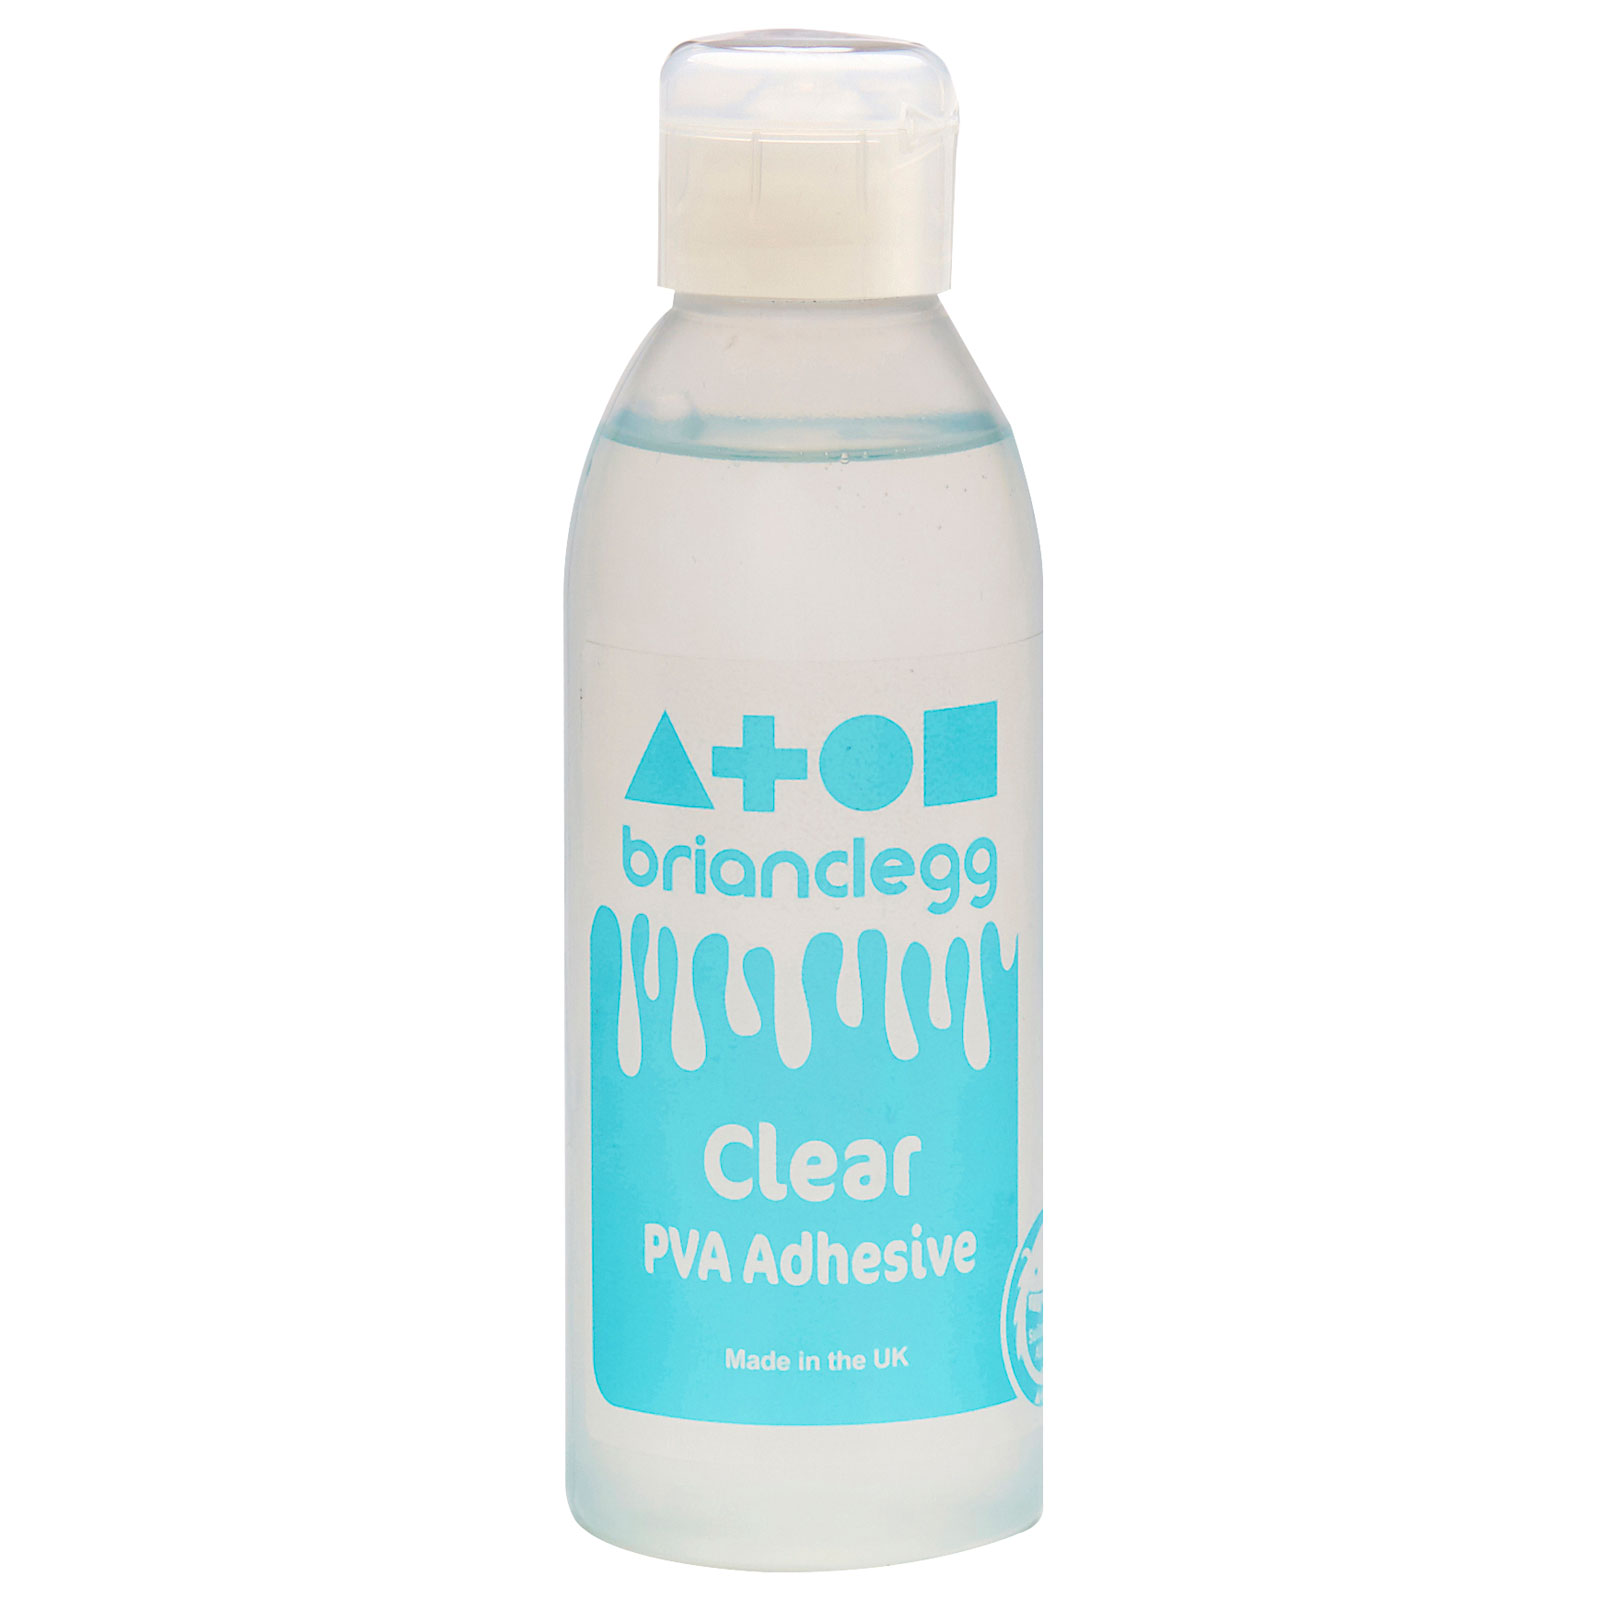 1kg eco-friendly pva clear glue for